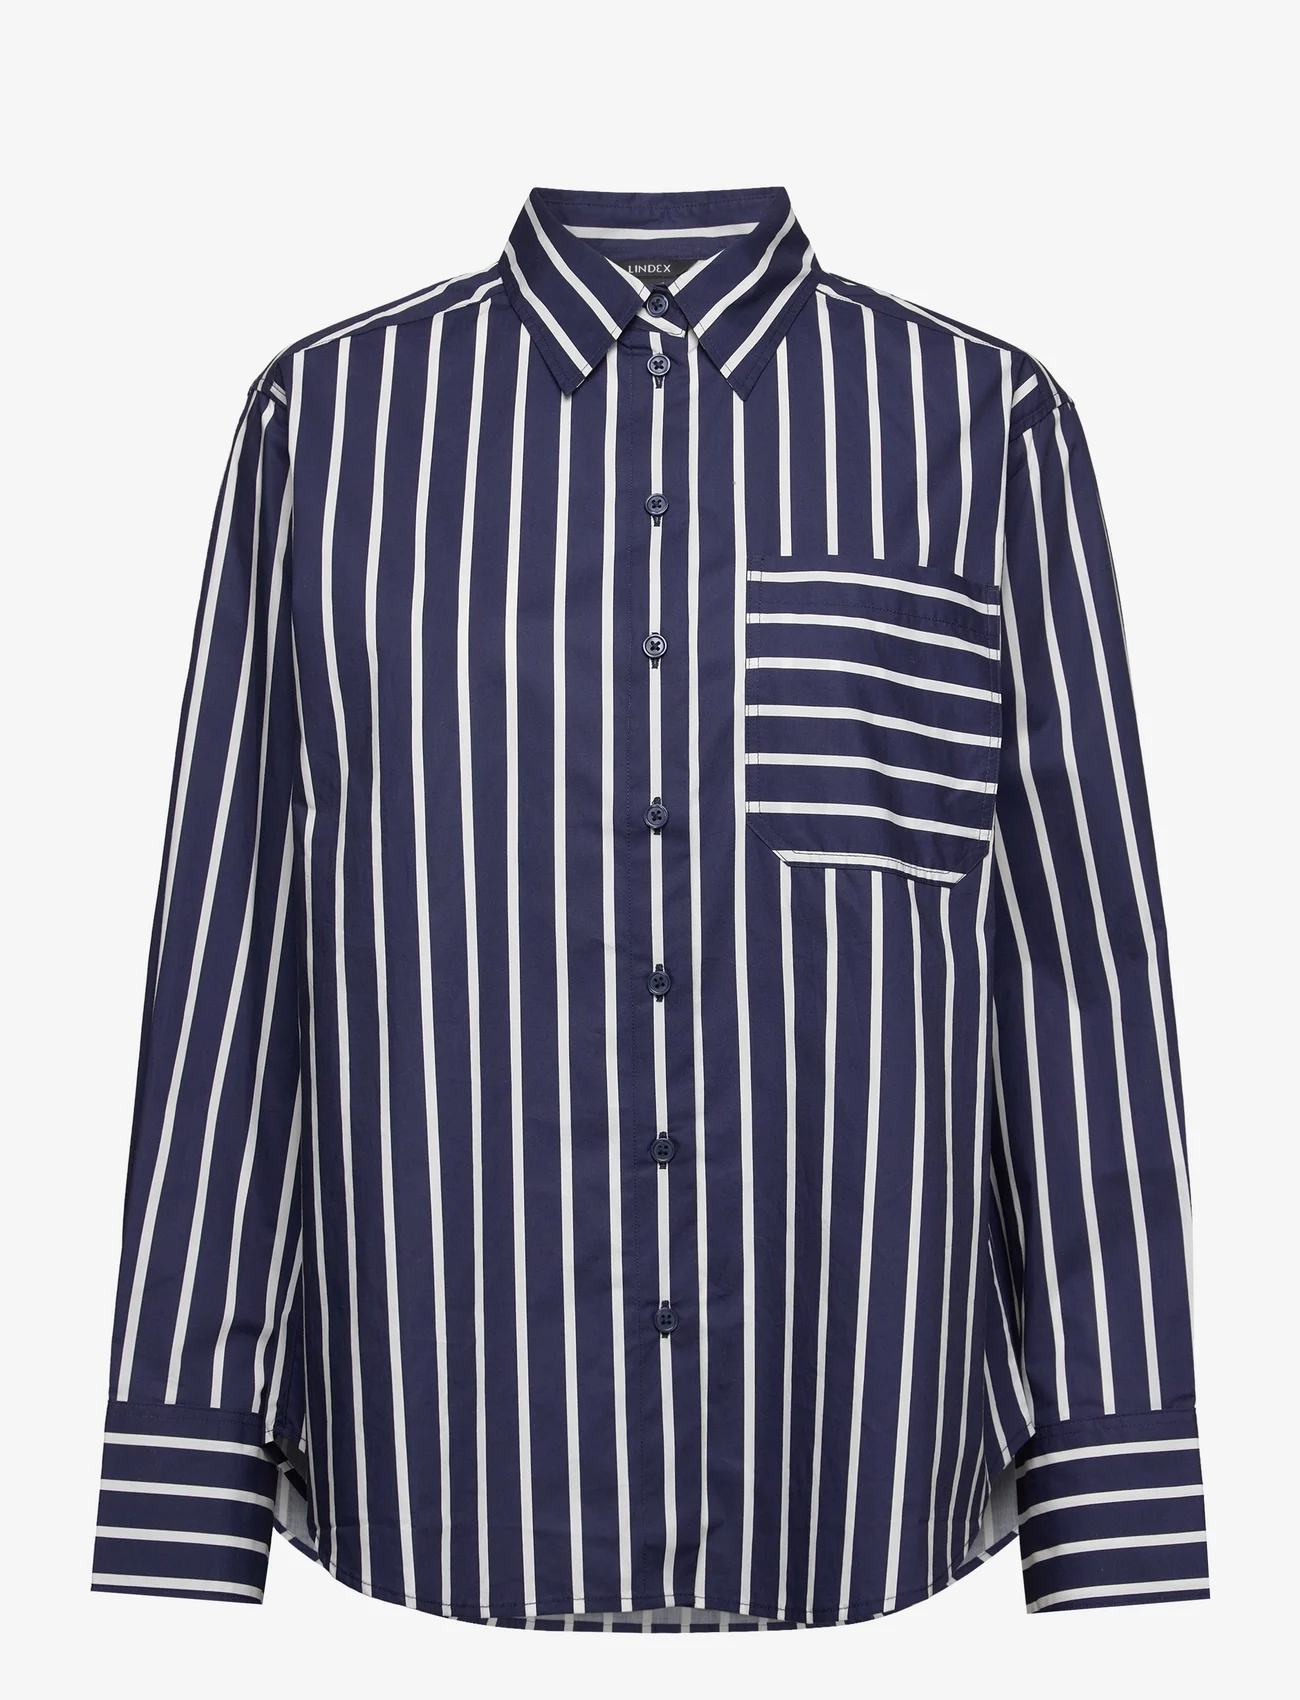 Lindex - Shirt April - pitkähihaiset paidat - dark blue - 0